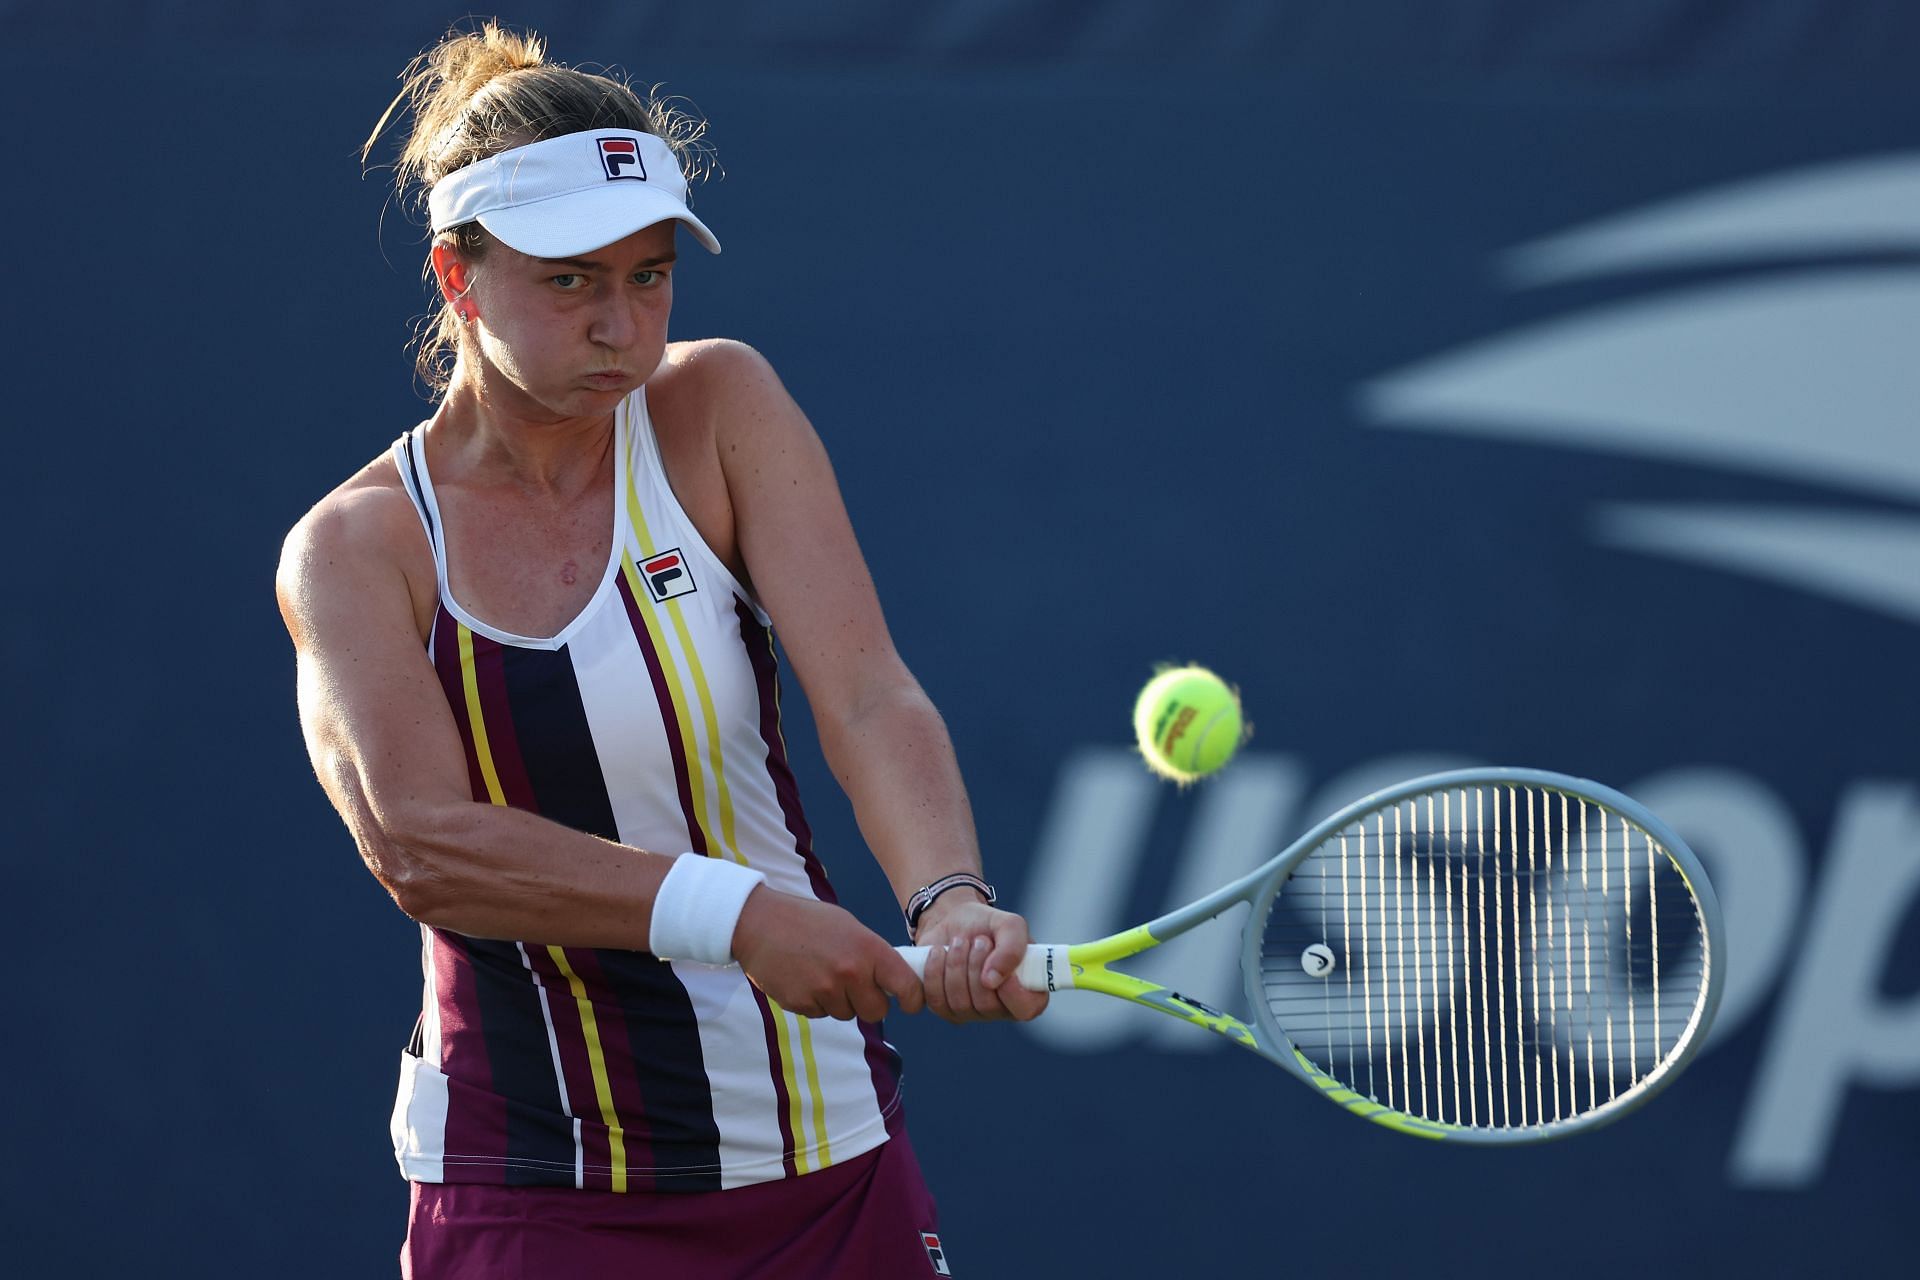 Barbora Krejcikova is yet to win a singles tournament in 2022